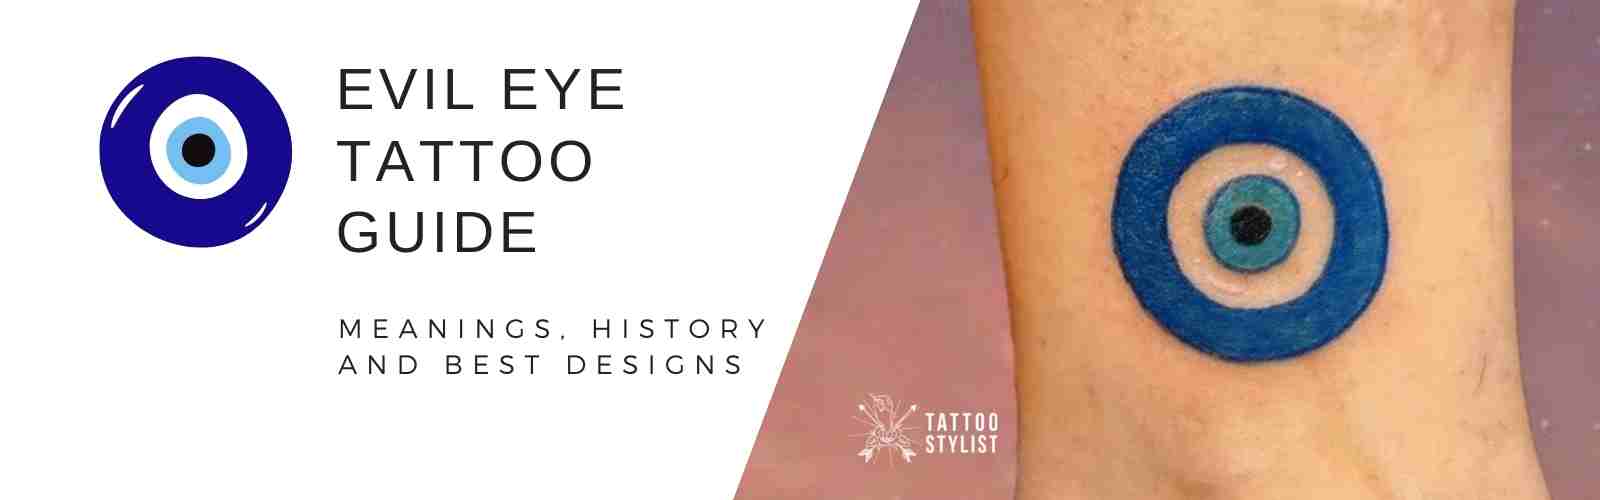 Greek evil eye tattoo meaning